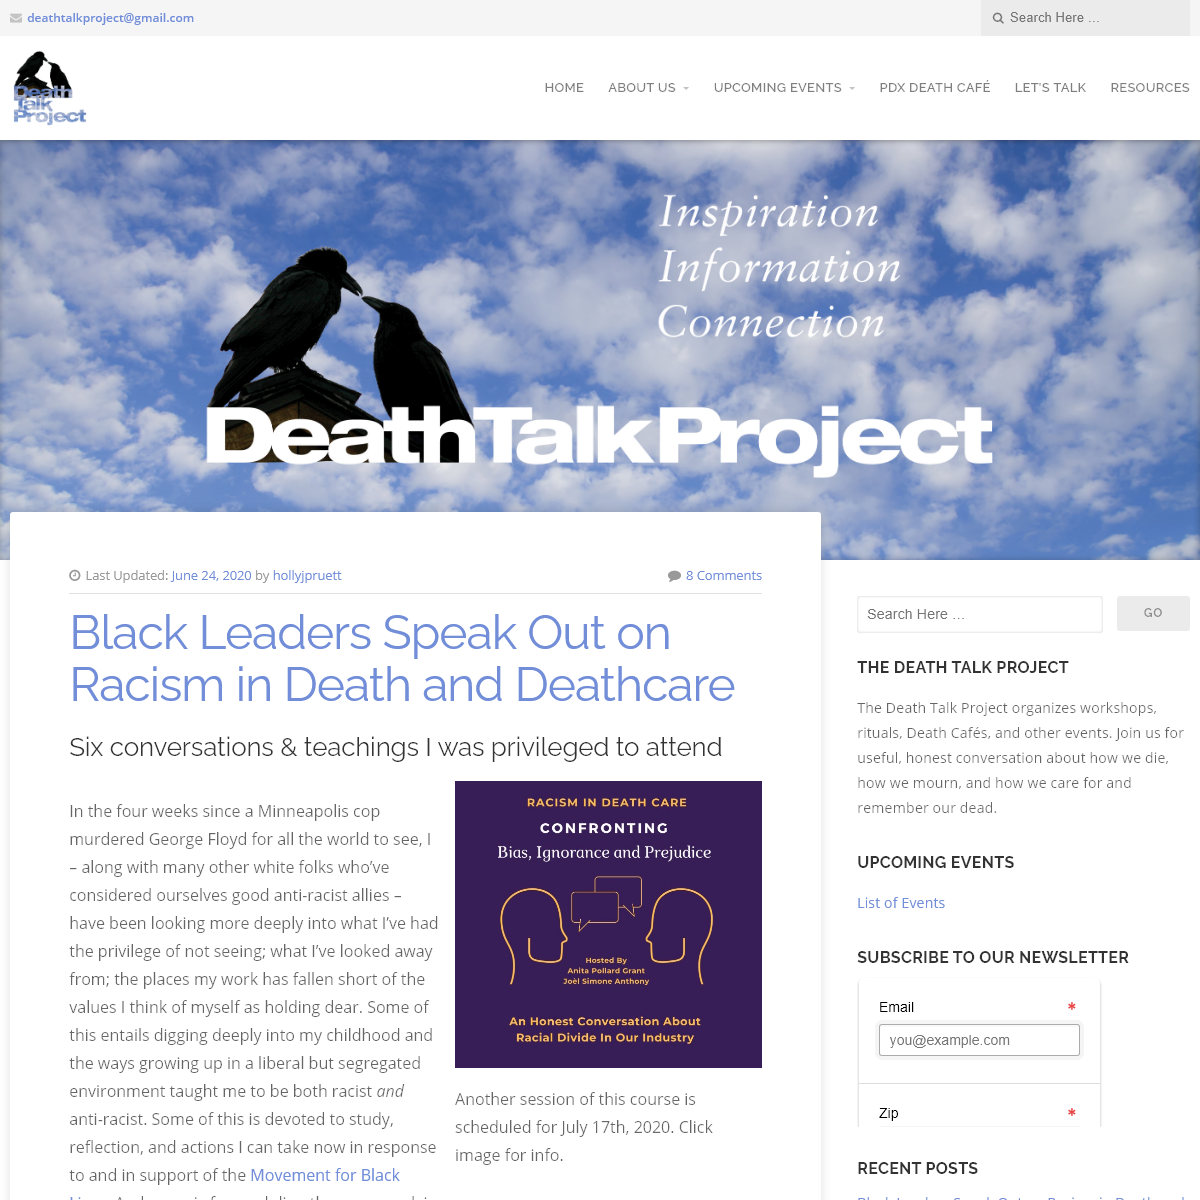 A complete backup of deathtalkproject.com